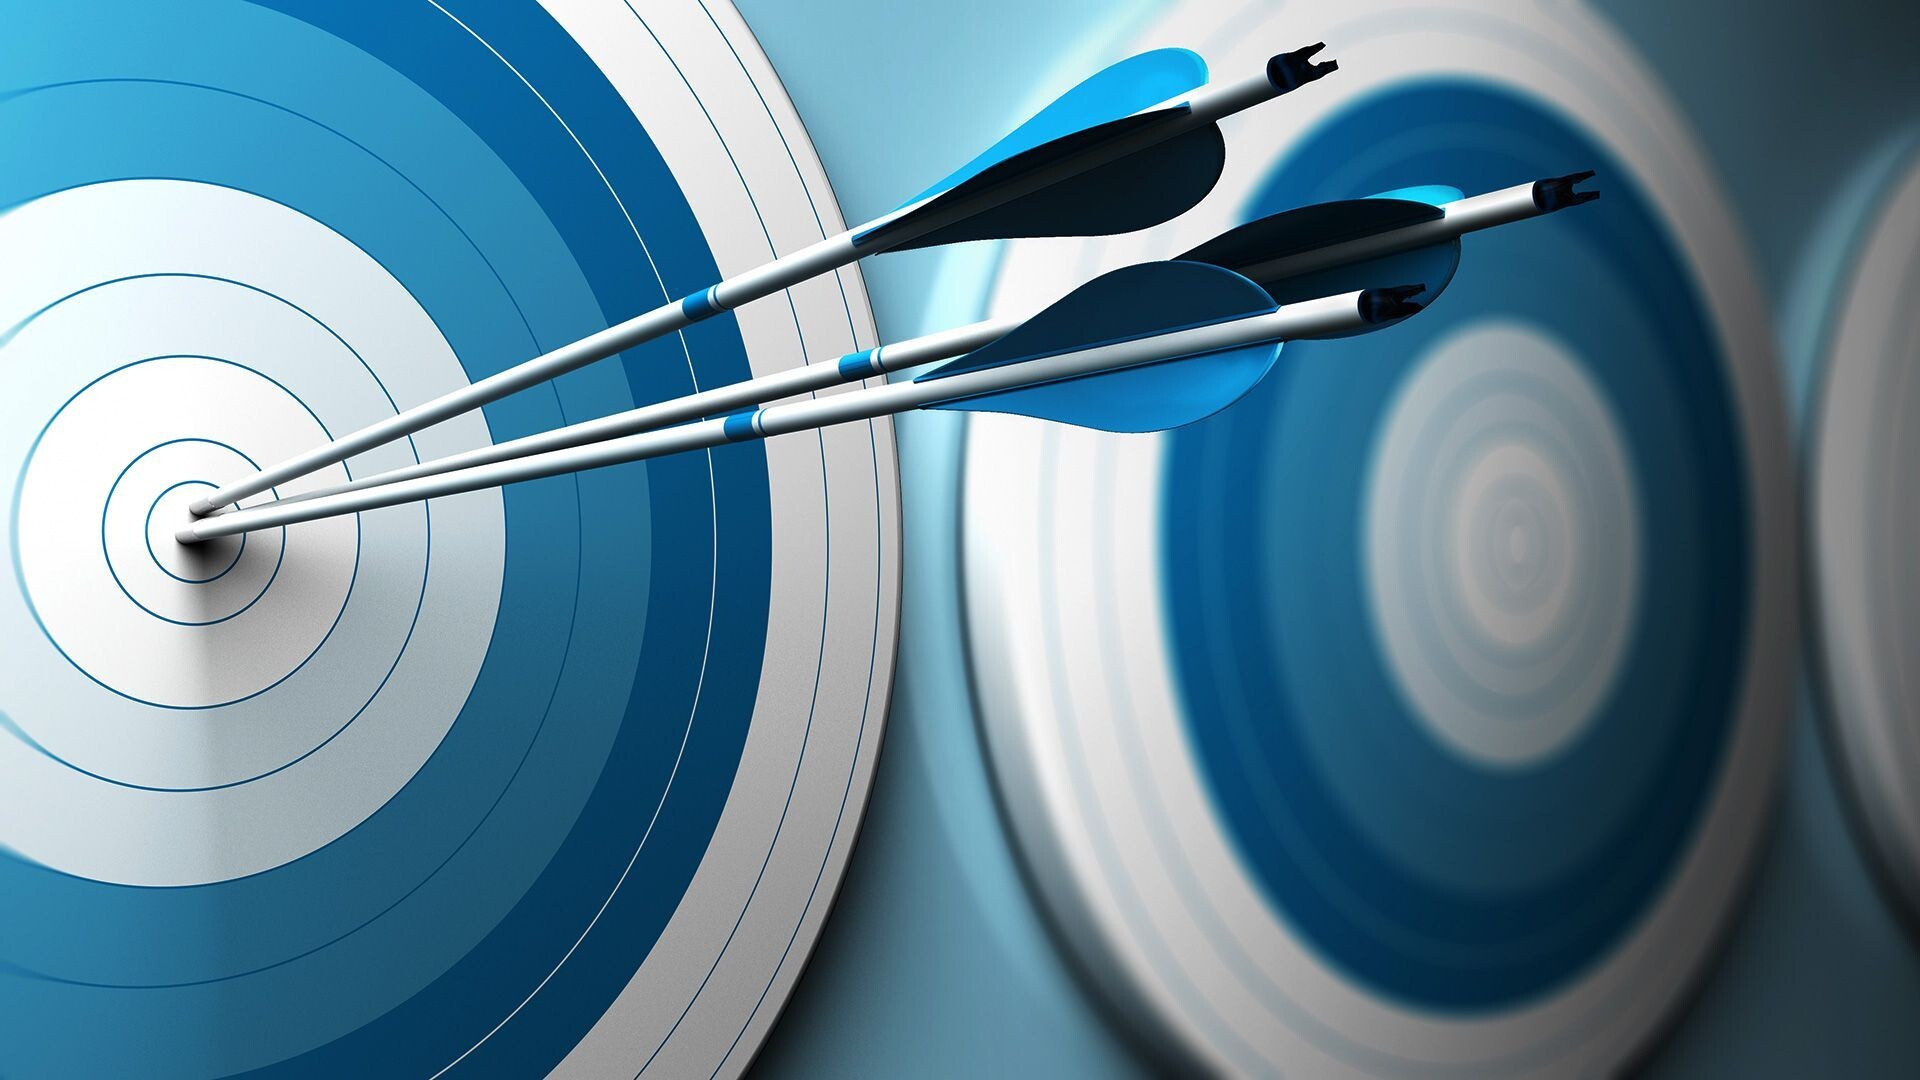 Goal (Aim): Arrows in the target, Figurative meaning, Milestone achievement, Success. 1920x1080 Full HD Wallpaper.